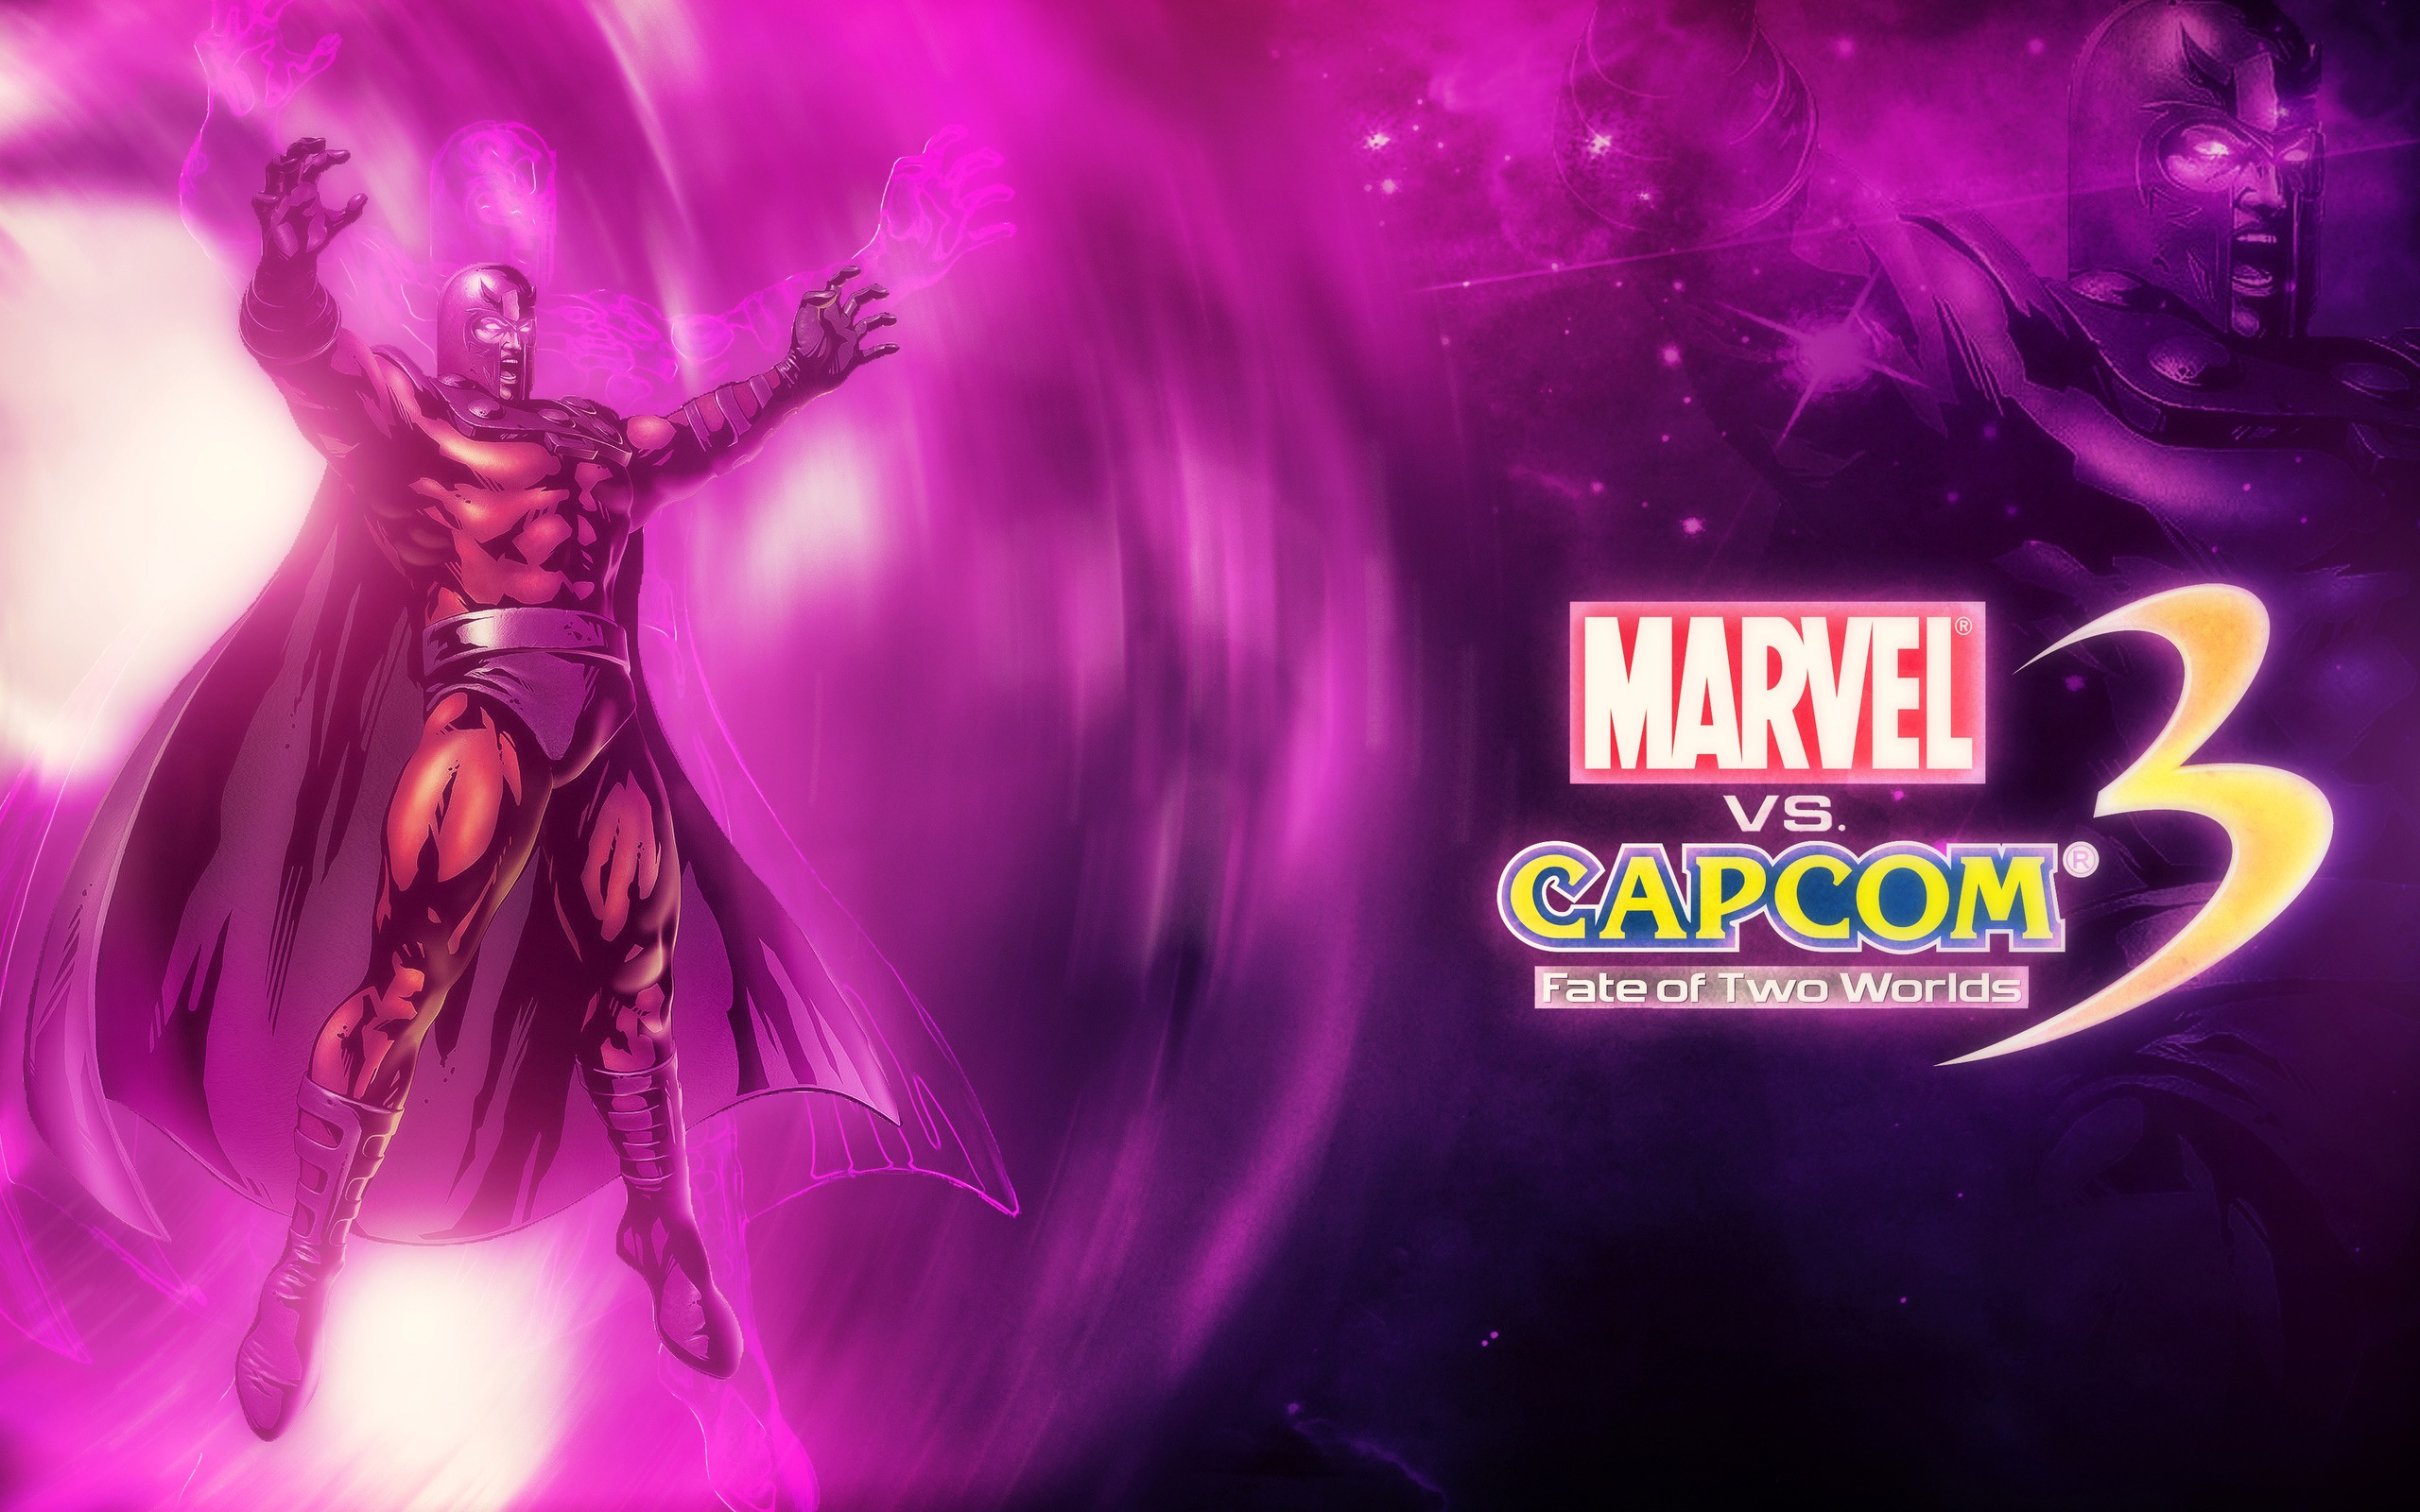 Marvel VS. Capcom 3: Fate of Two Worlds 漫畫英雄VS.卡普空3 高清遊戲壁紙 #7 - 2560x1600